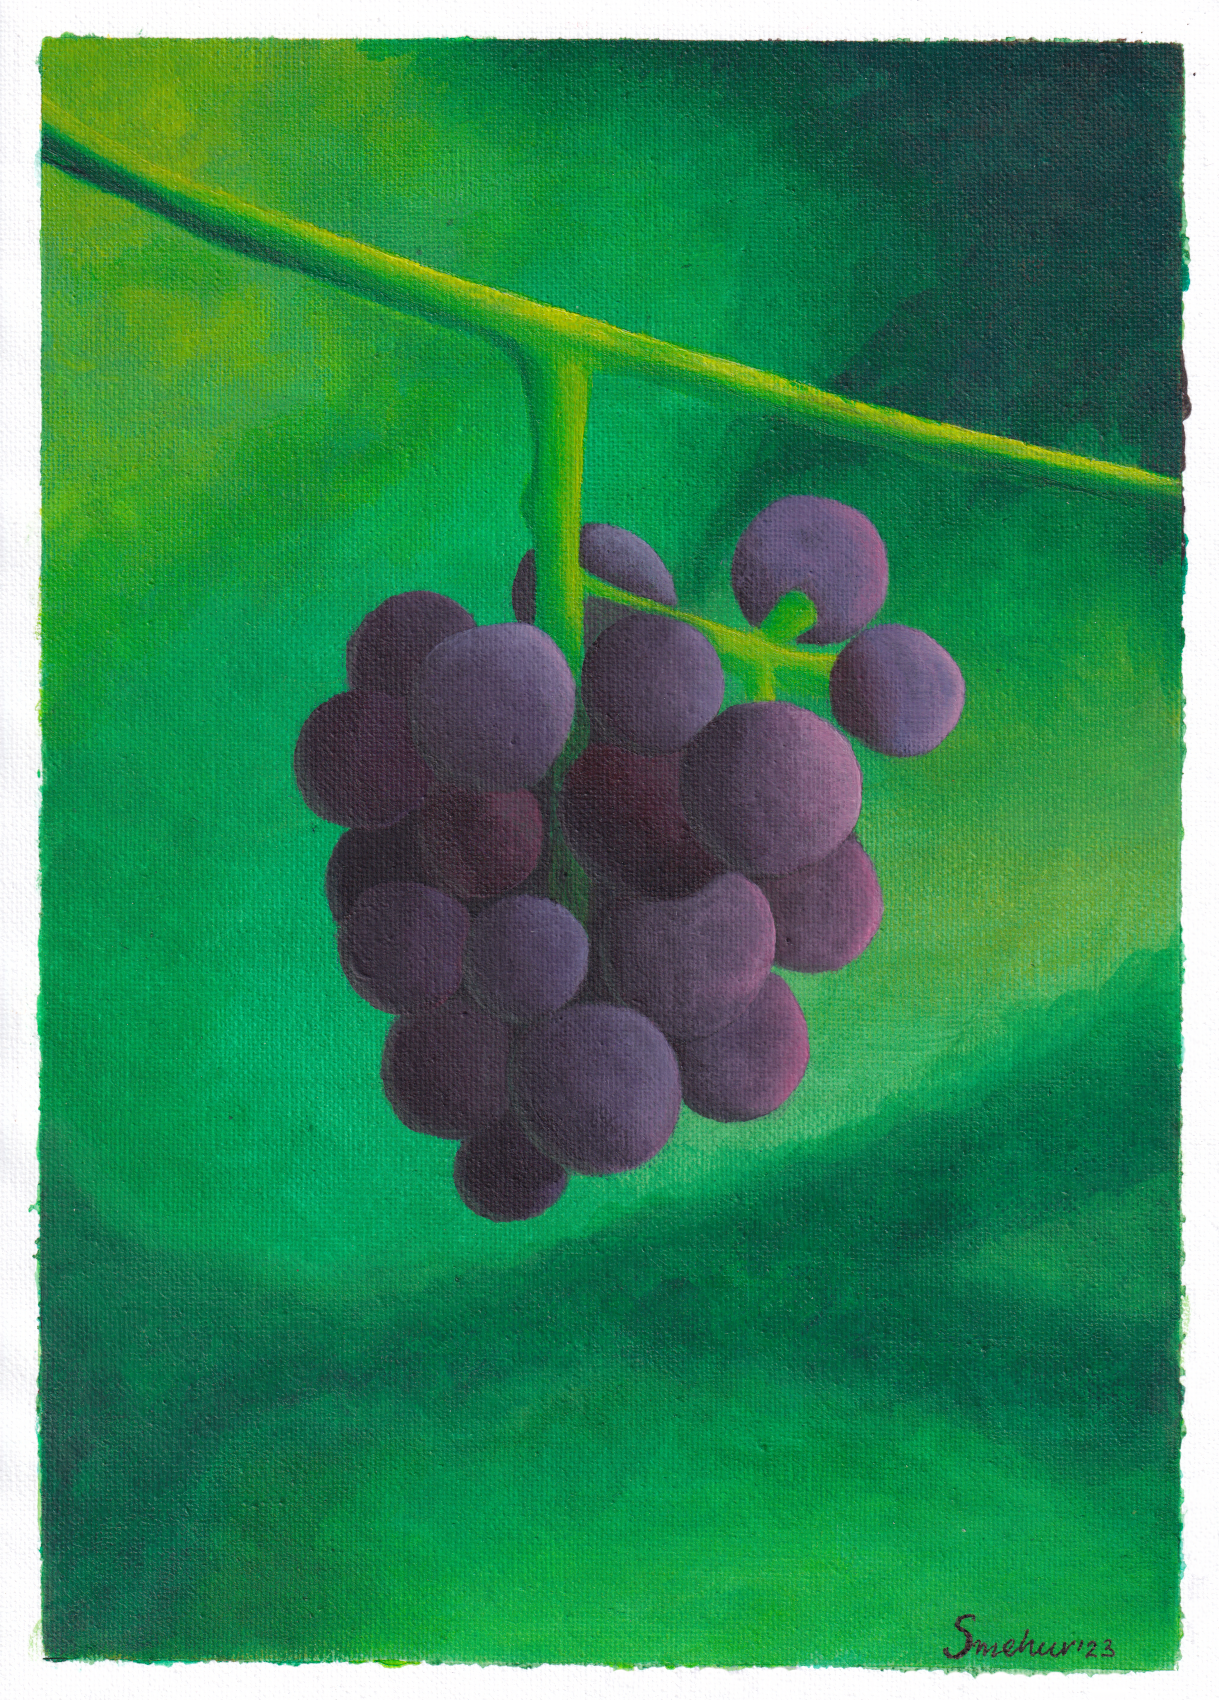 Acrylic grapes